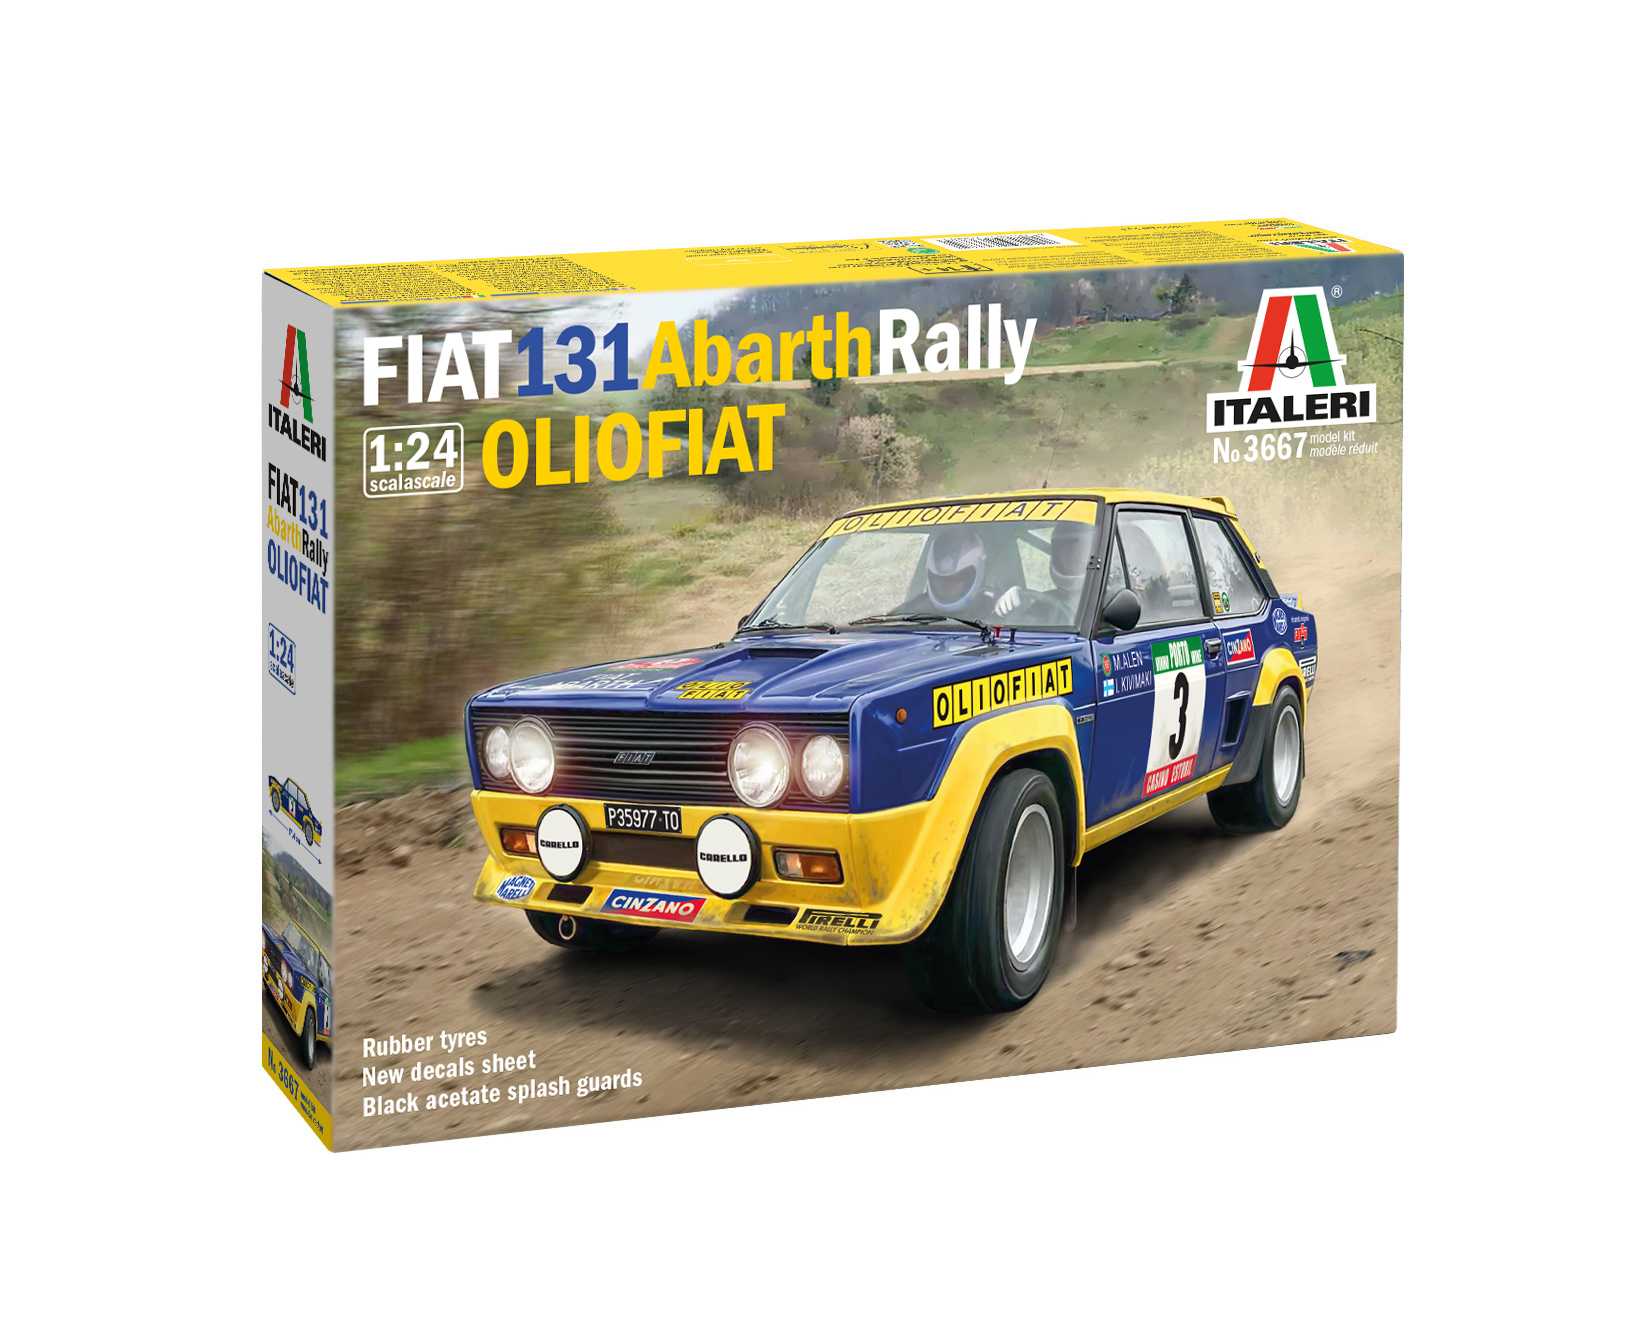 FIAT 131 Abarth Rally OLIO FIAT (Italeri 1:24)